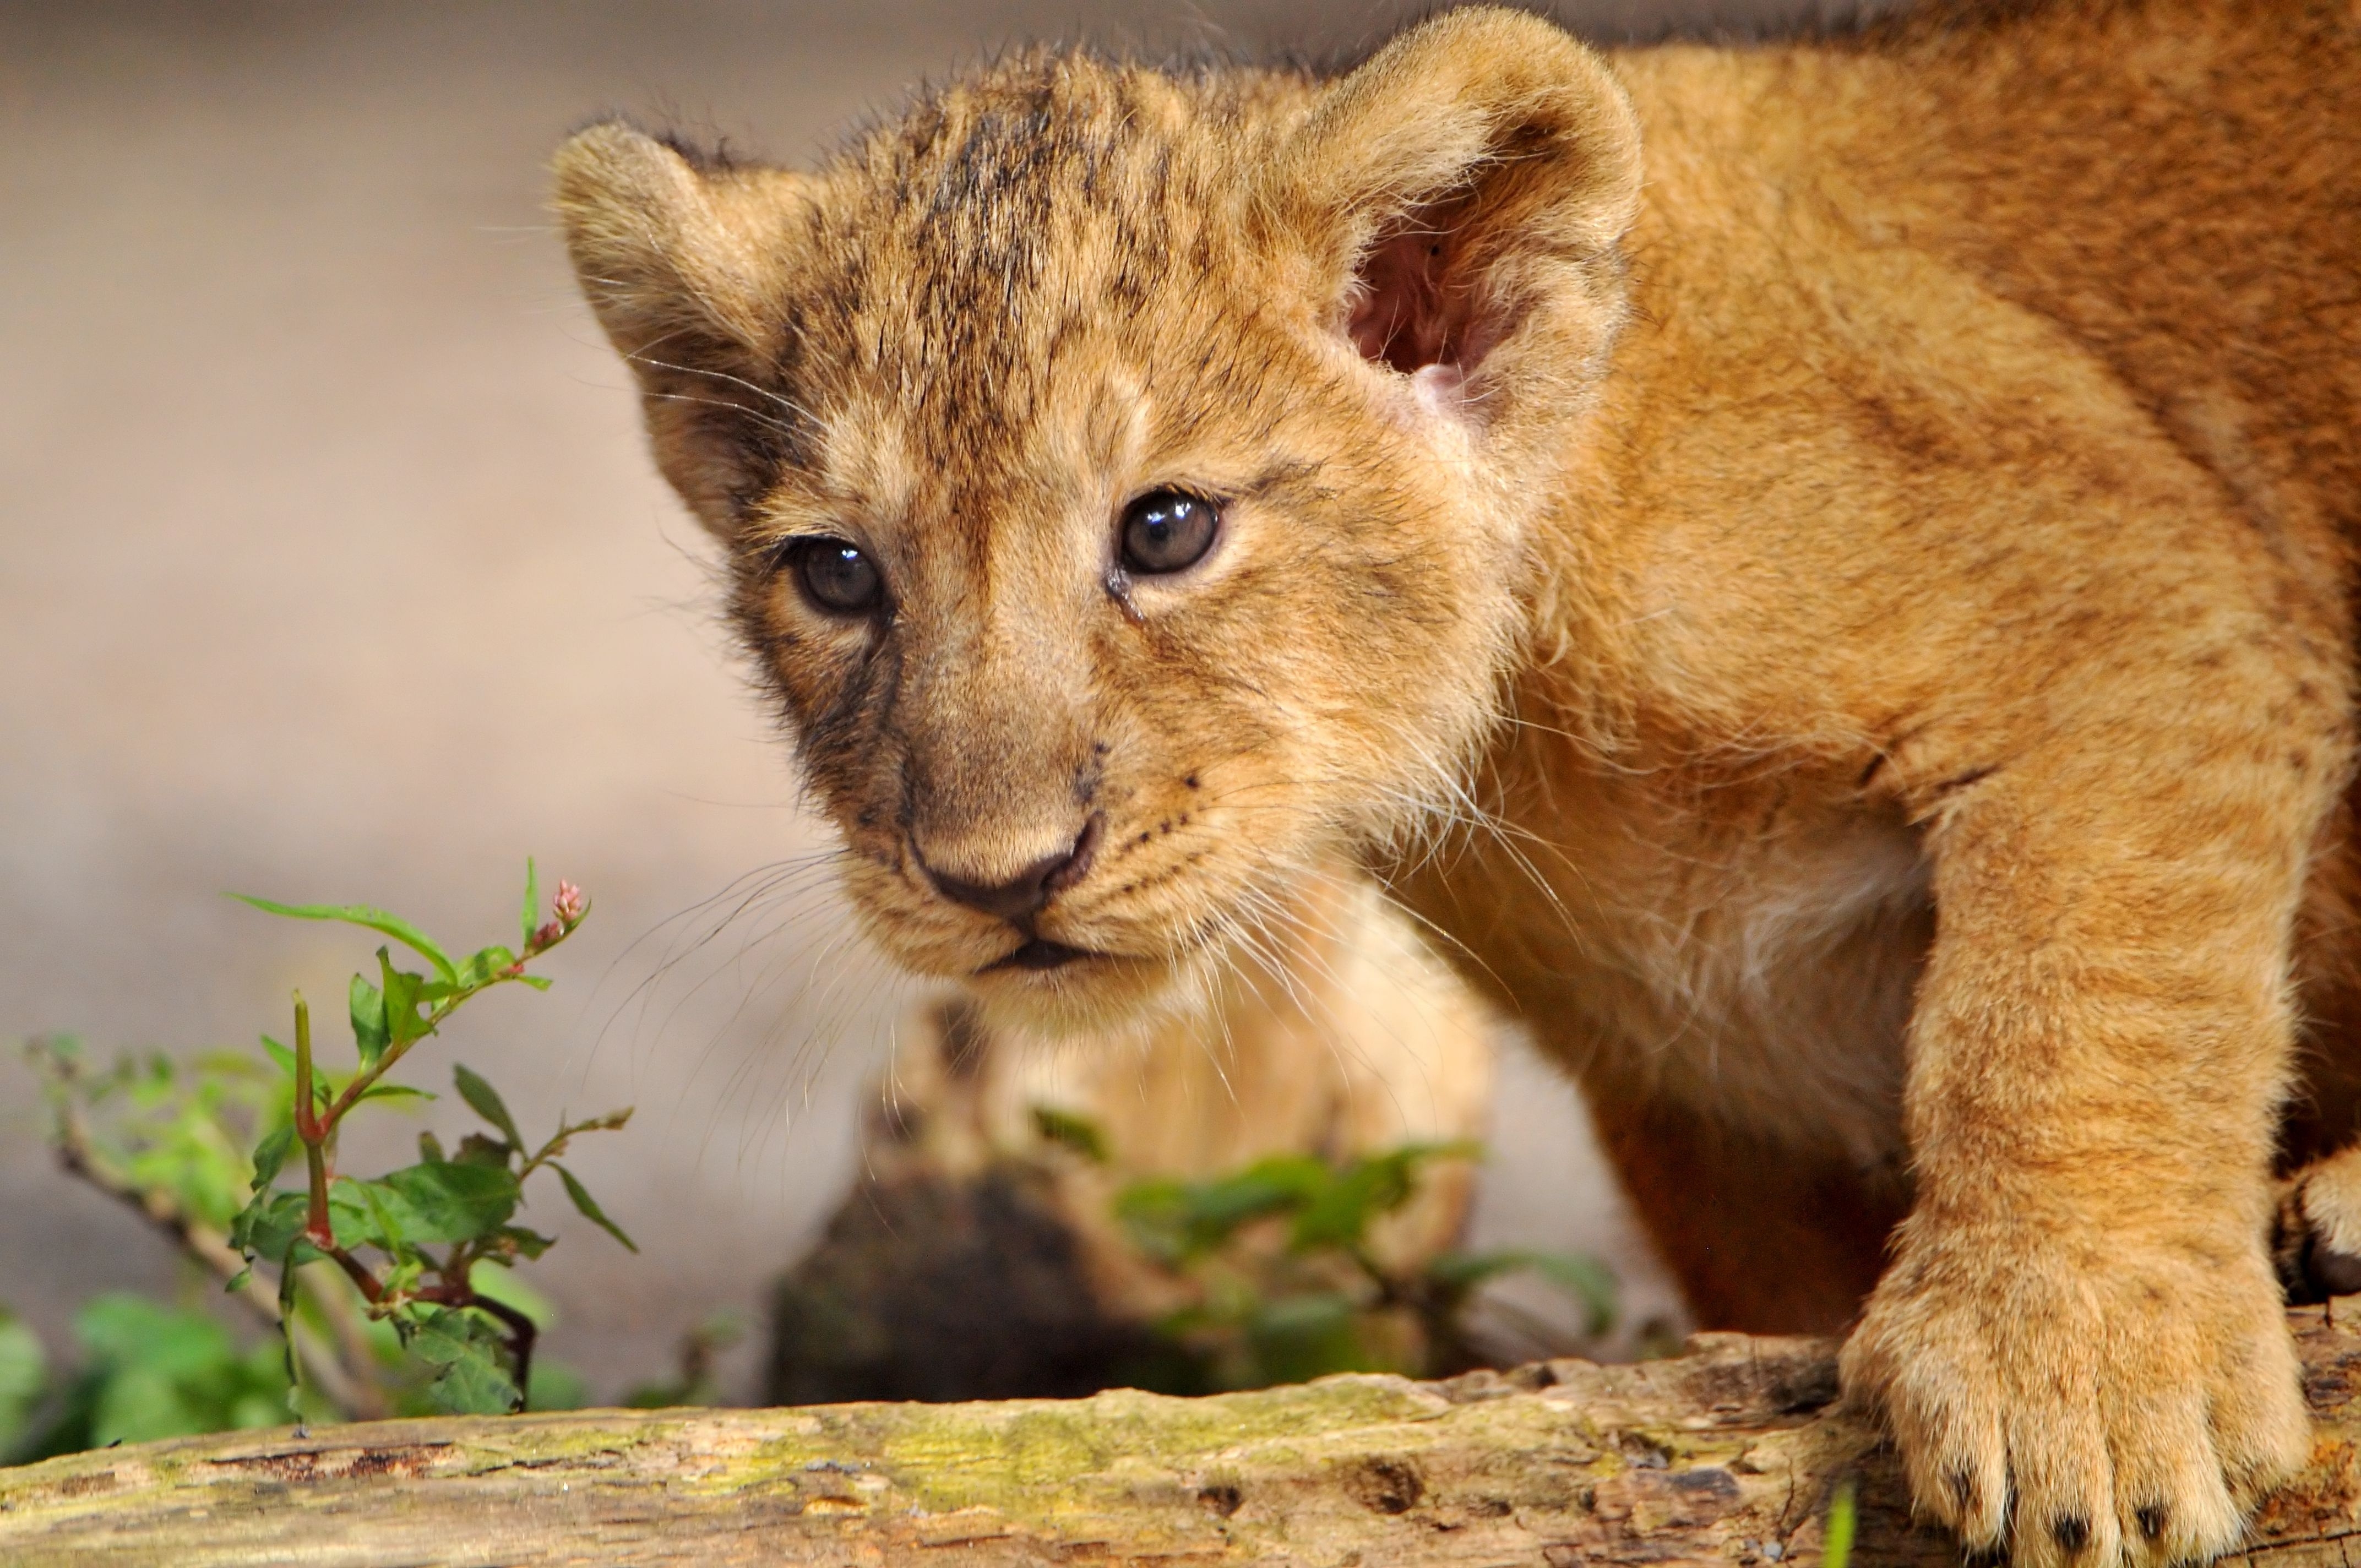 animals, young, lion, predator, joey, curiosity, lion cub, step